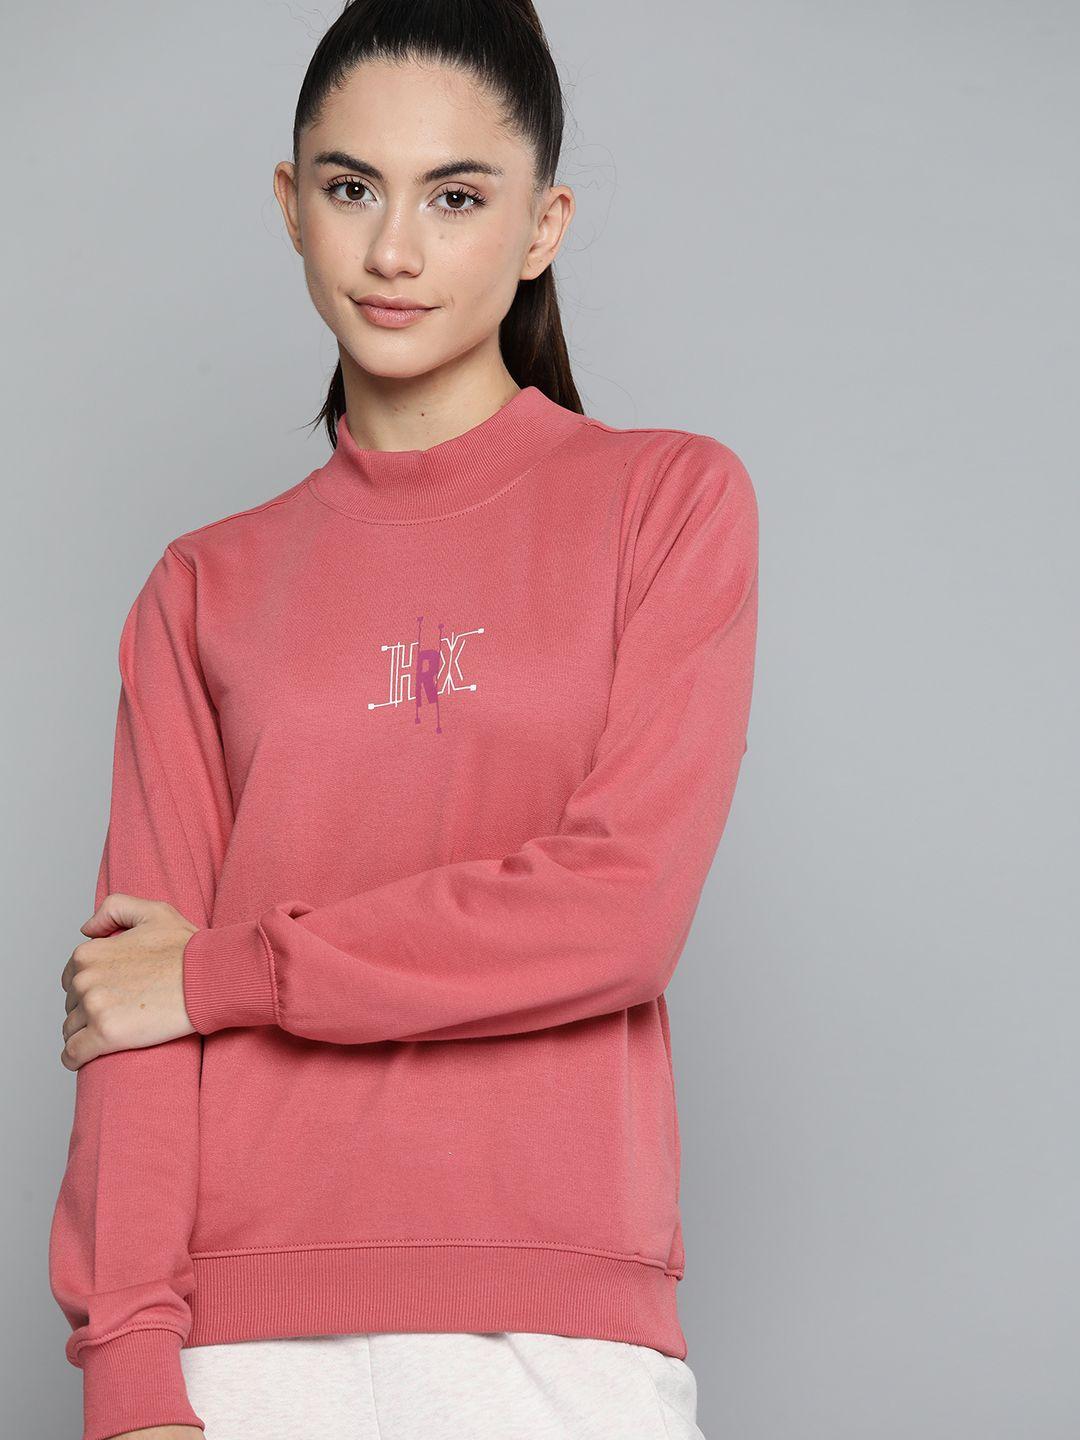 hrx by hrithik roshan women rose printed sweatshirt